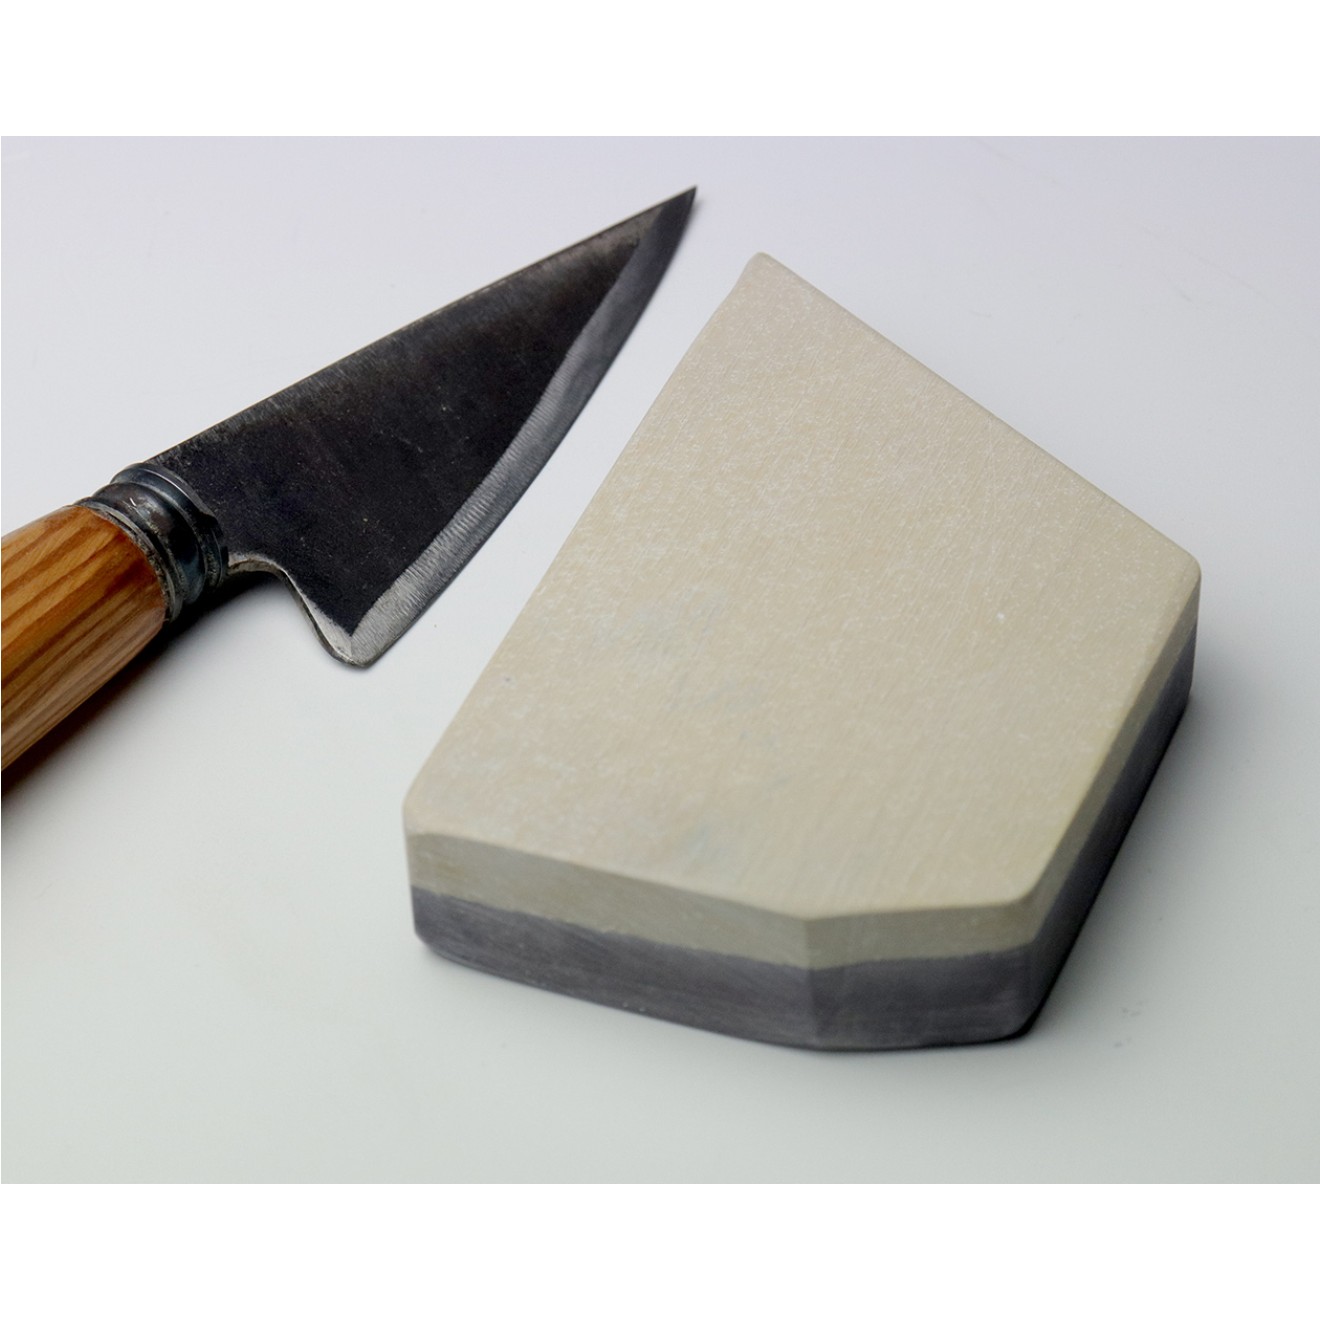 Belgian sharpening stone 6, 46.8-57.6 ins², extra-fine